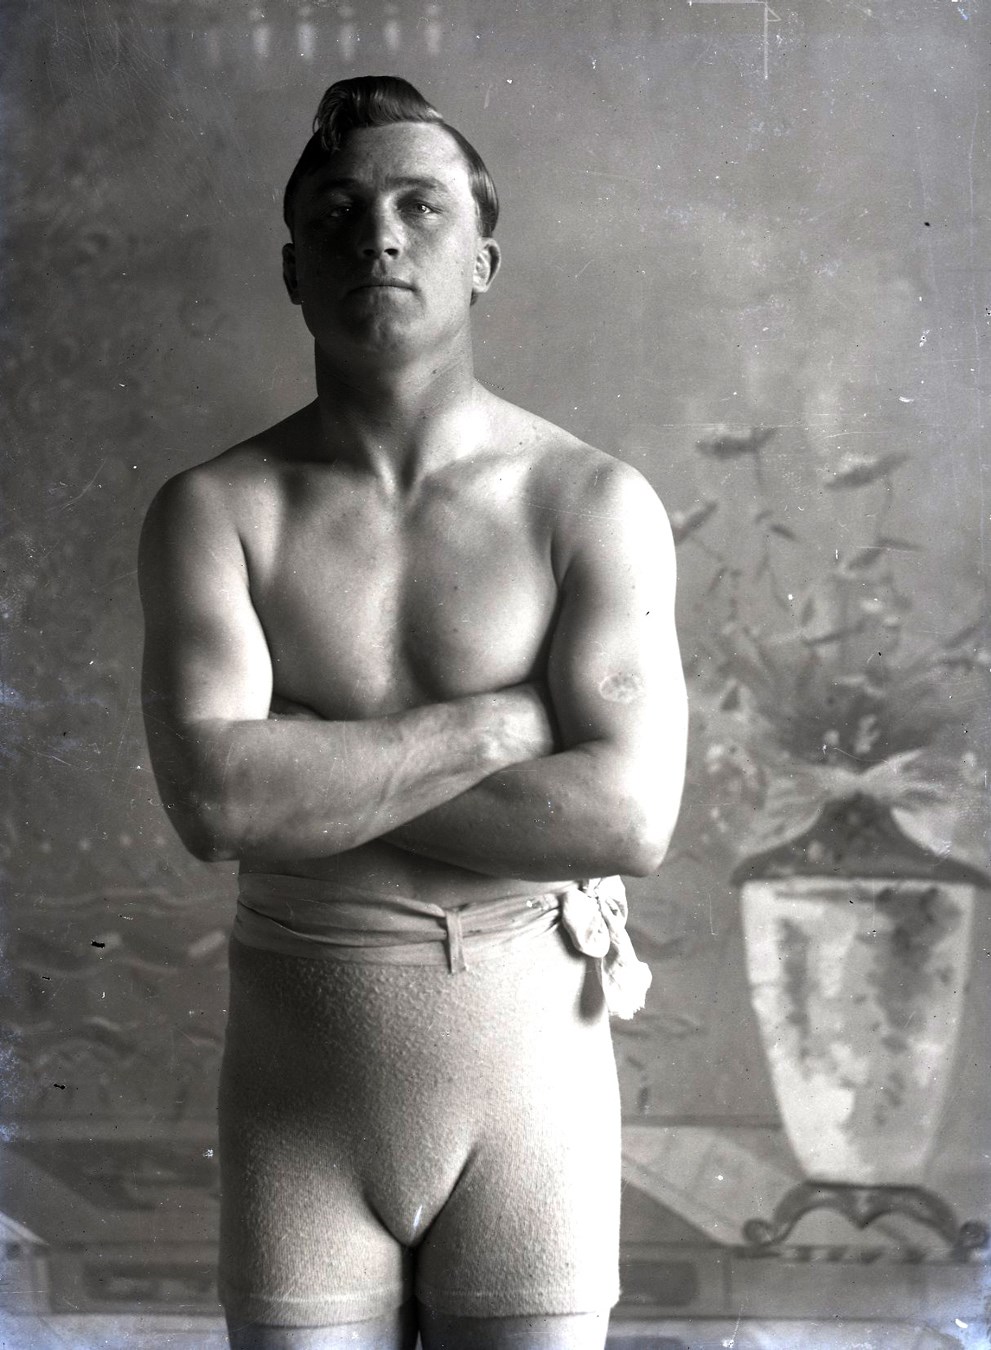 Early 1900s Fireman Jim Flynn "Boxing Pose" Type I Glass Plate Negative by Dana Studio